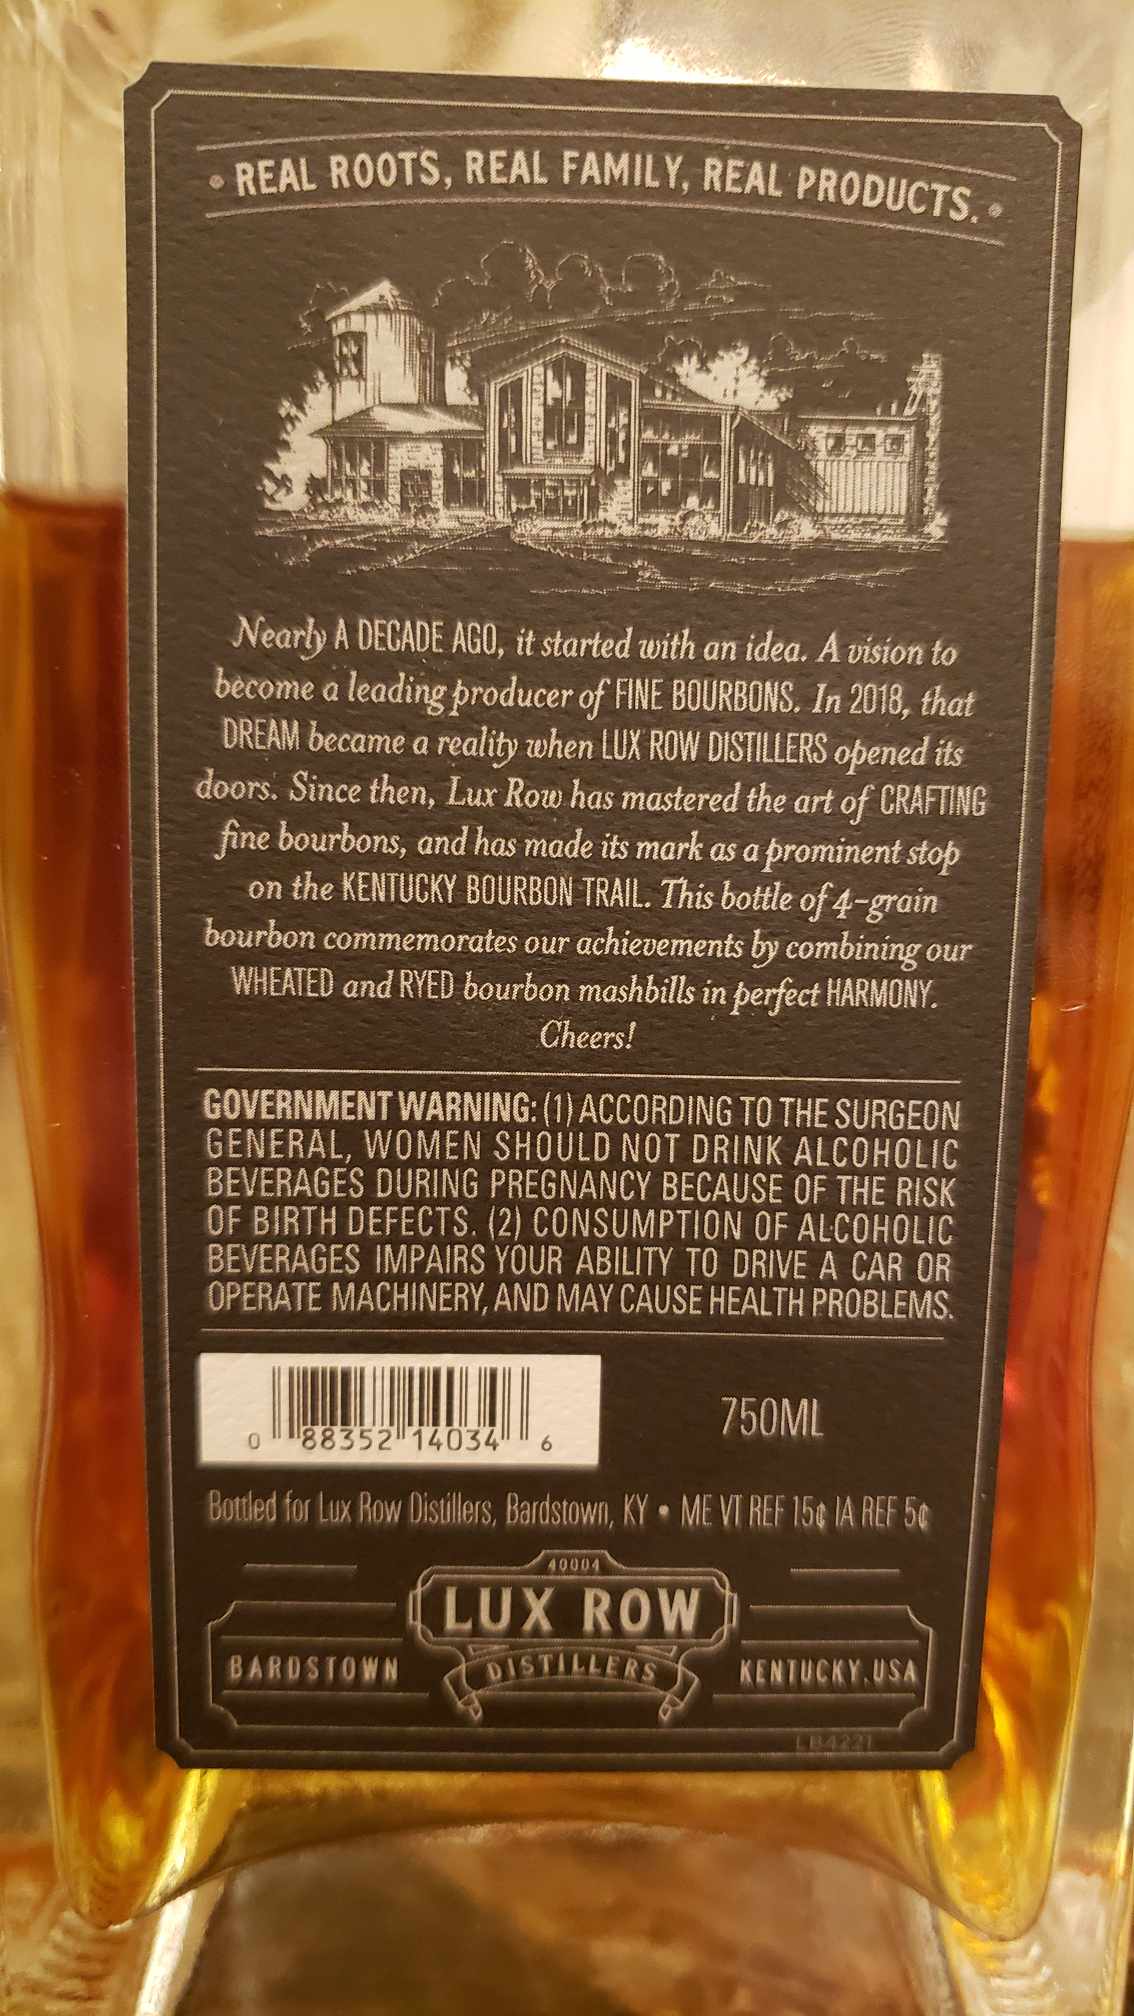 Lux Row Four Grain Double Single Barrel Bourbon Review - Secret Whiskey Society - Lux Row History - Bottle Back Label